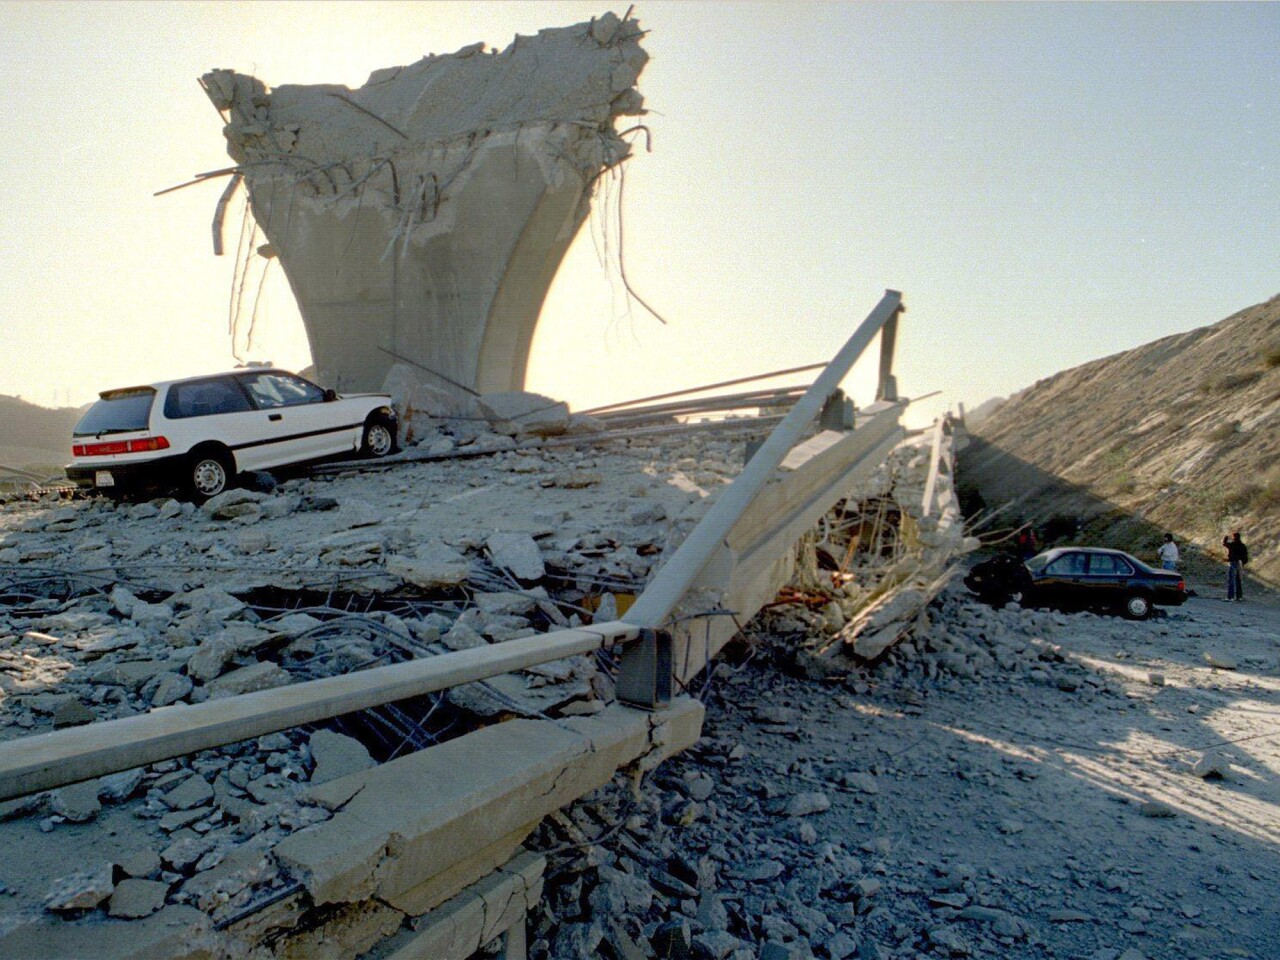 northridge earthquake case study